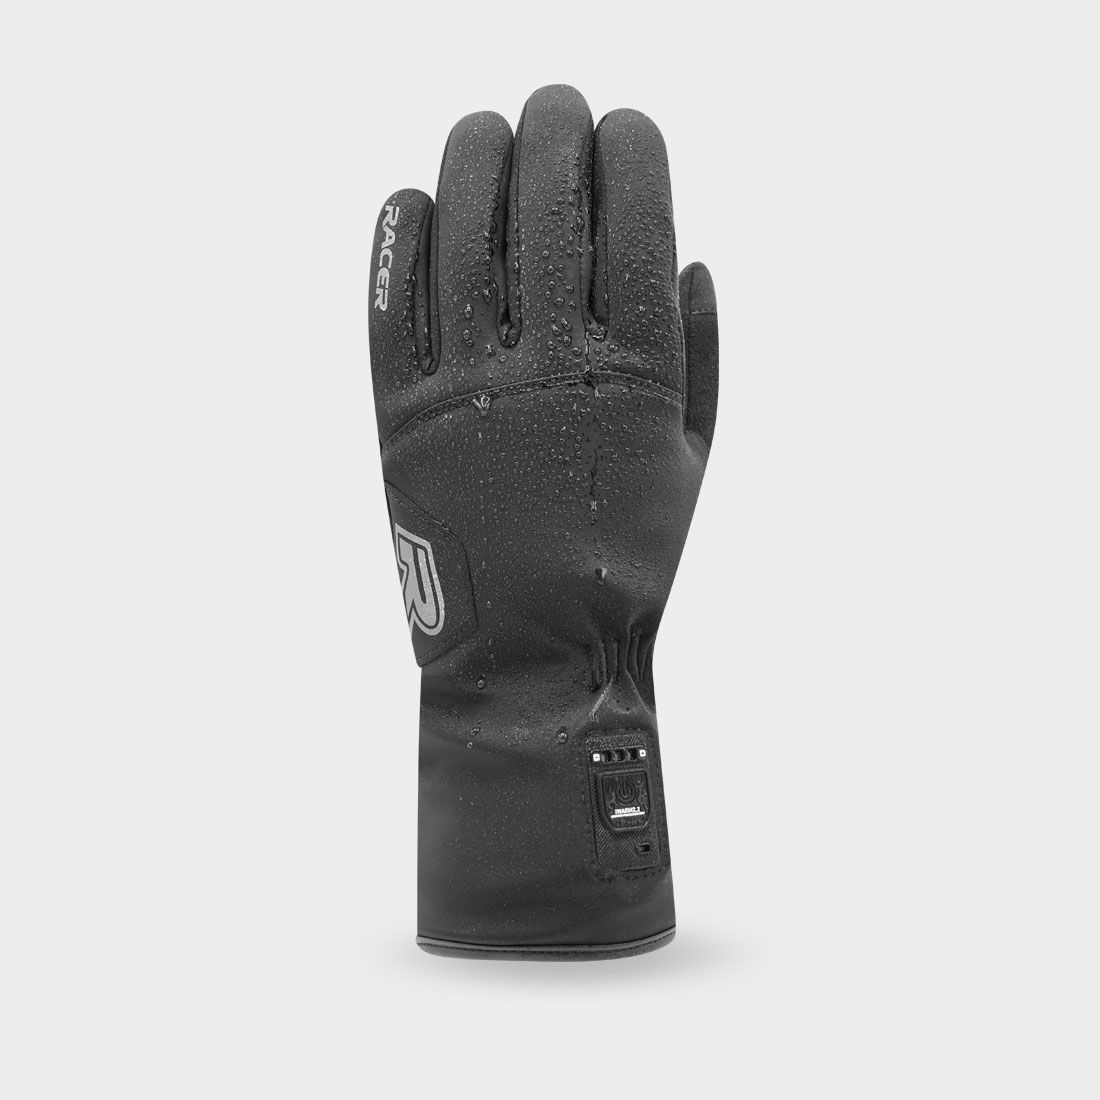 E-GLOVE 3 - SOFTSHELL Glove - Clarino